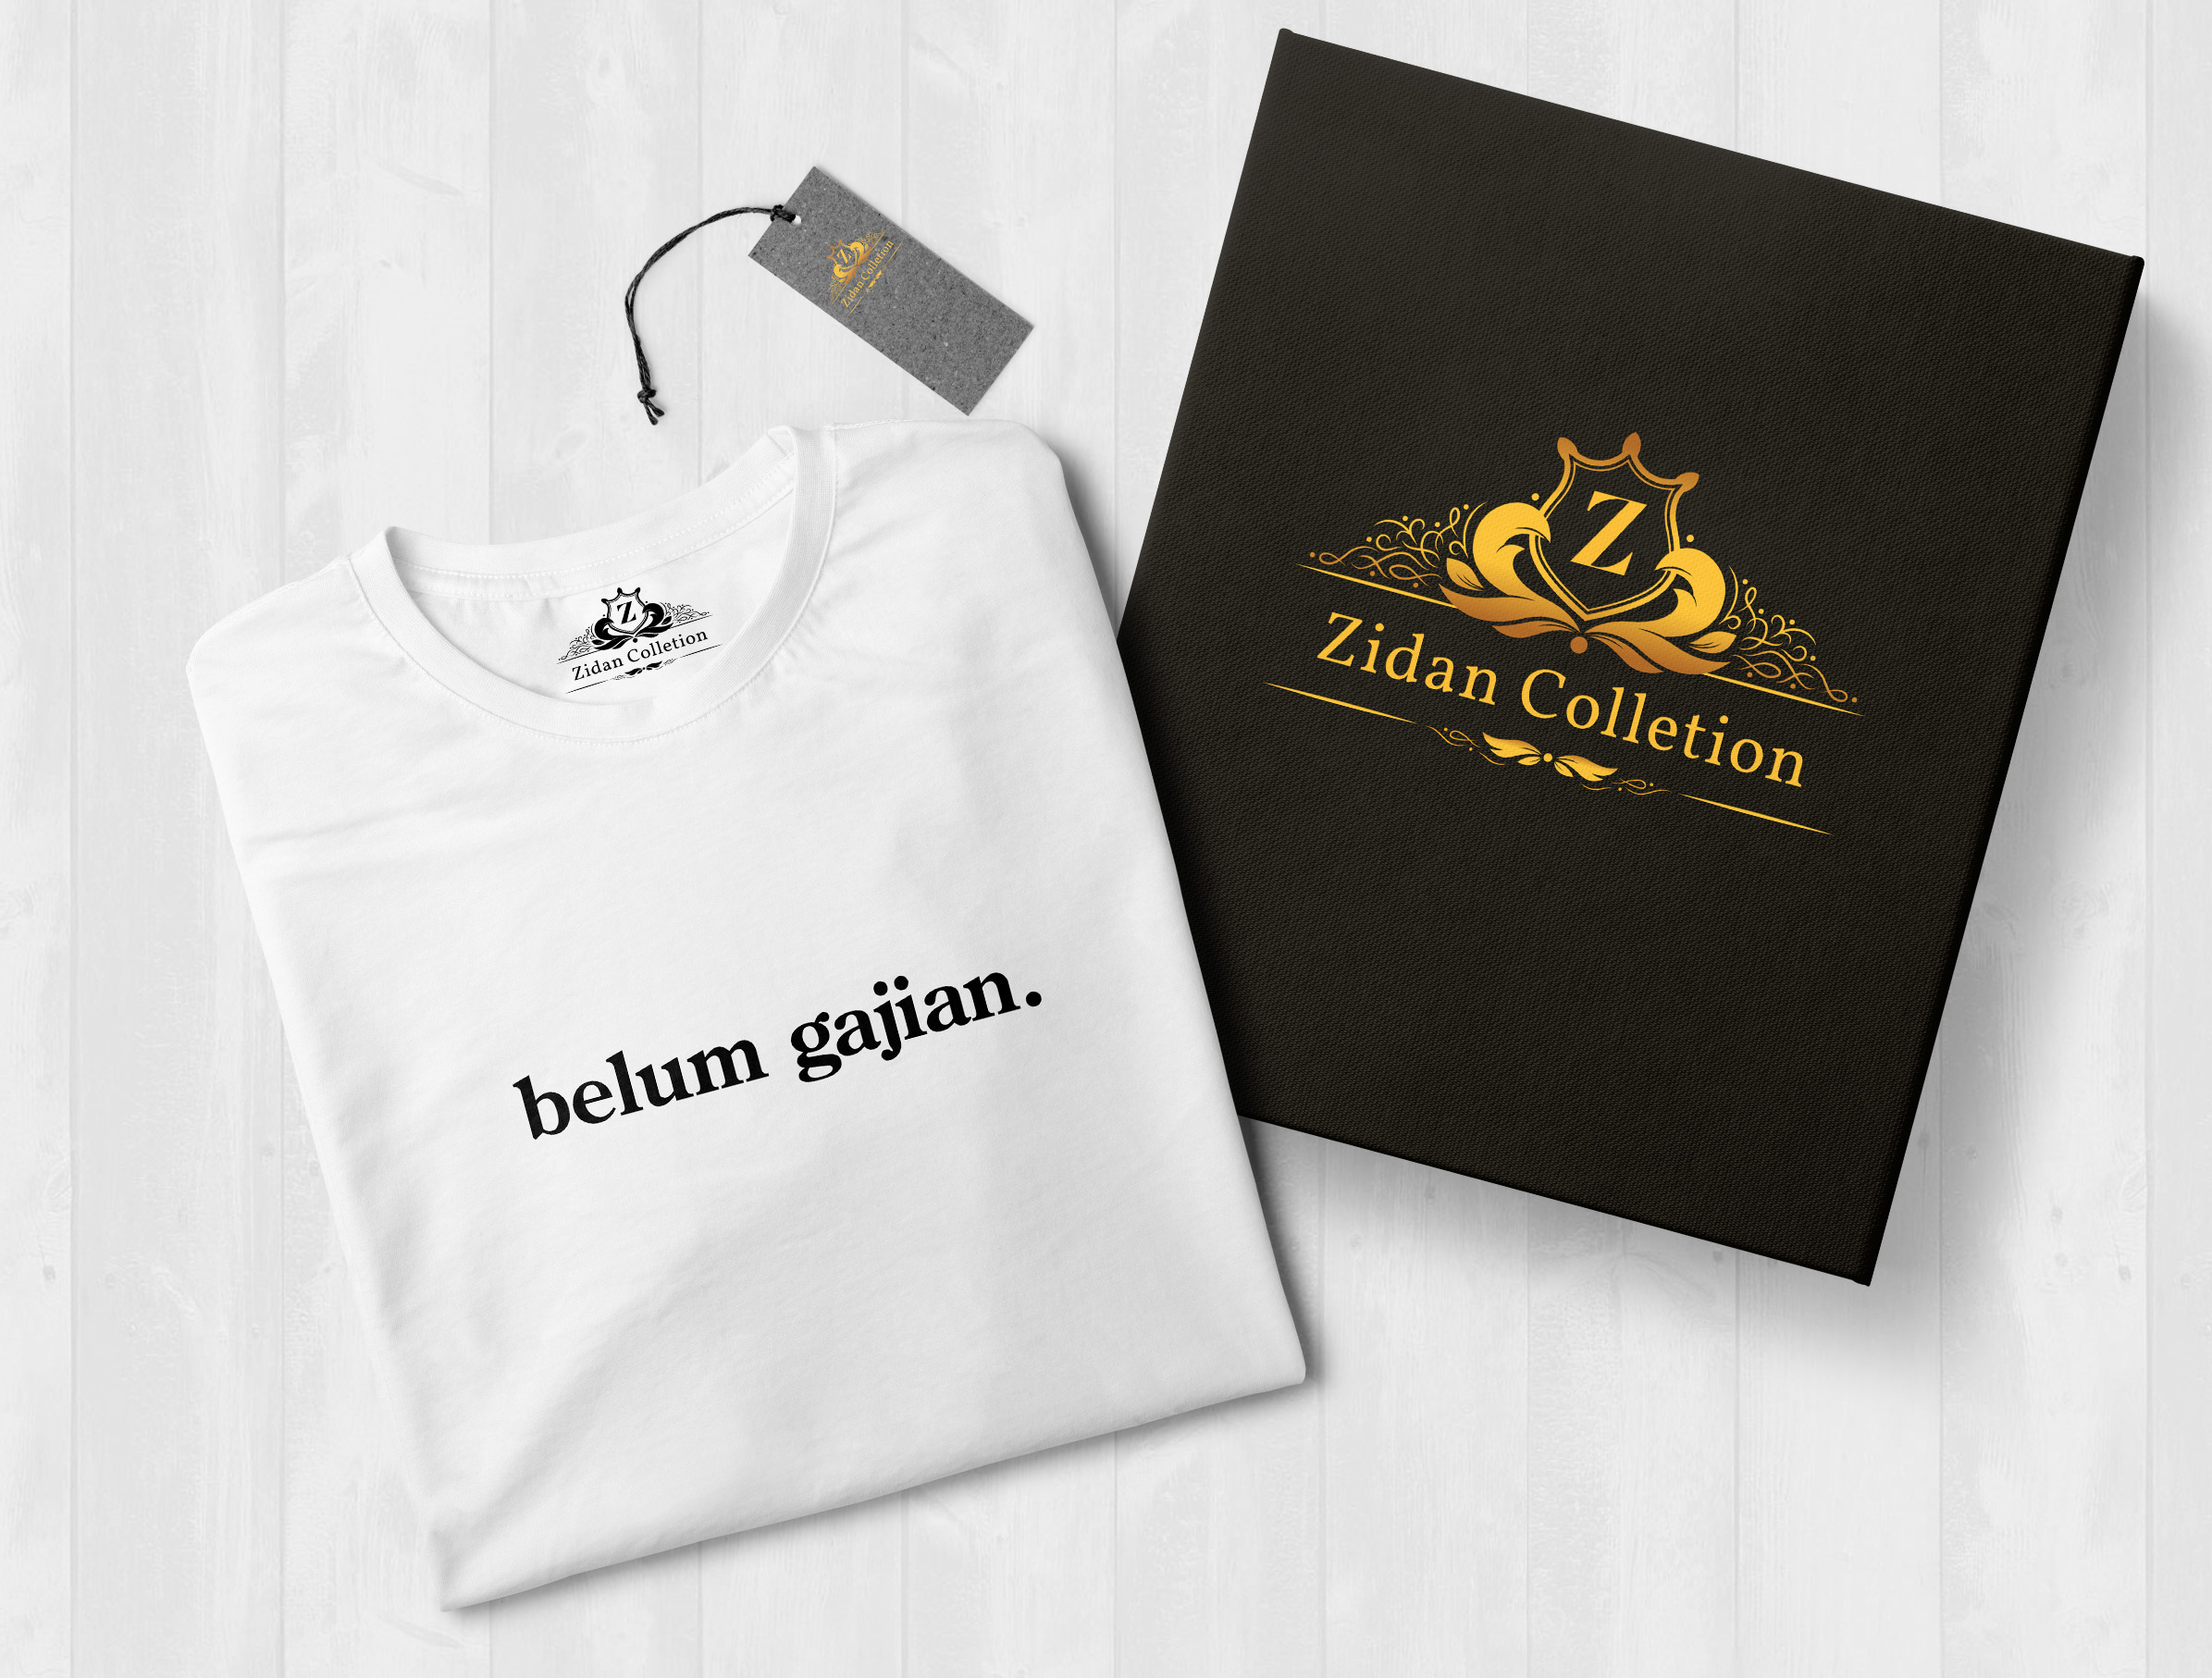 Zidan Collection Kaos Tulisan Pria Distro T Shirt Fashion 100